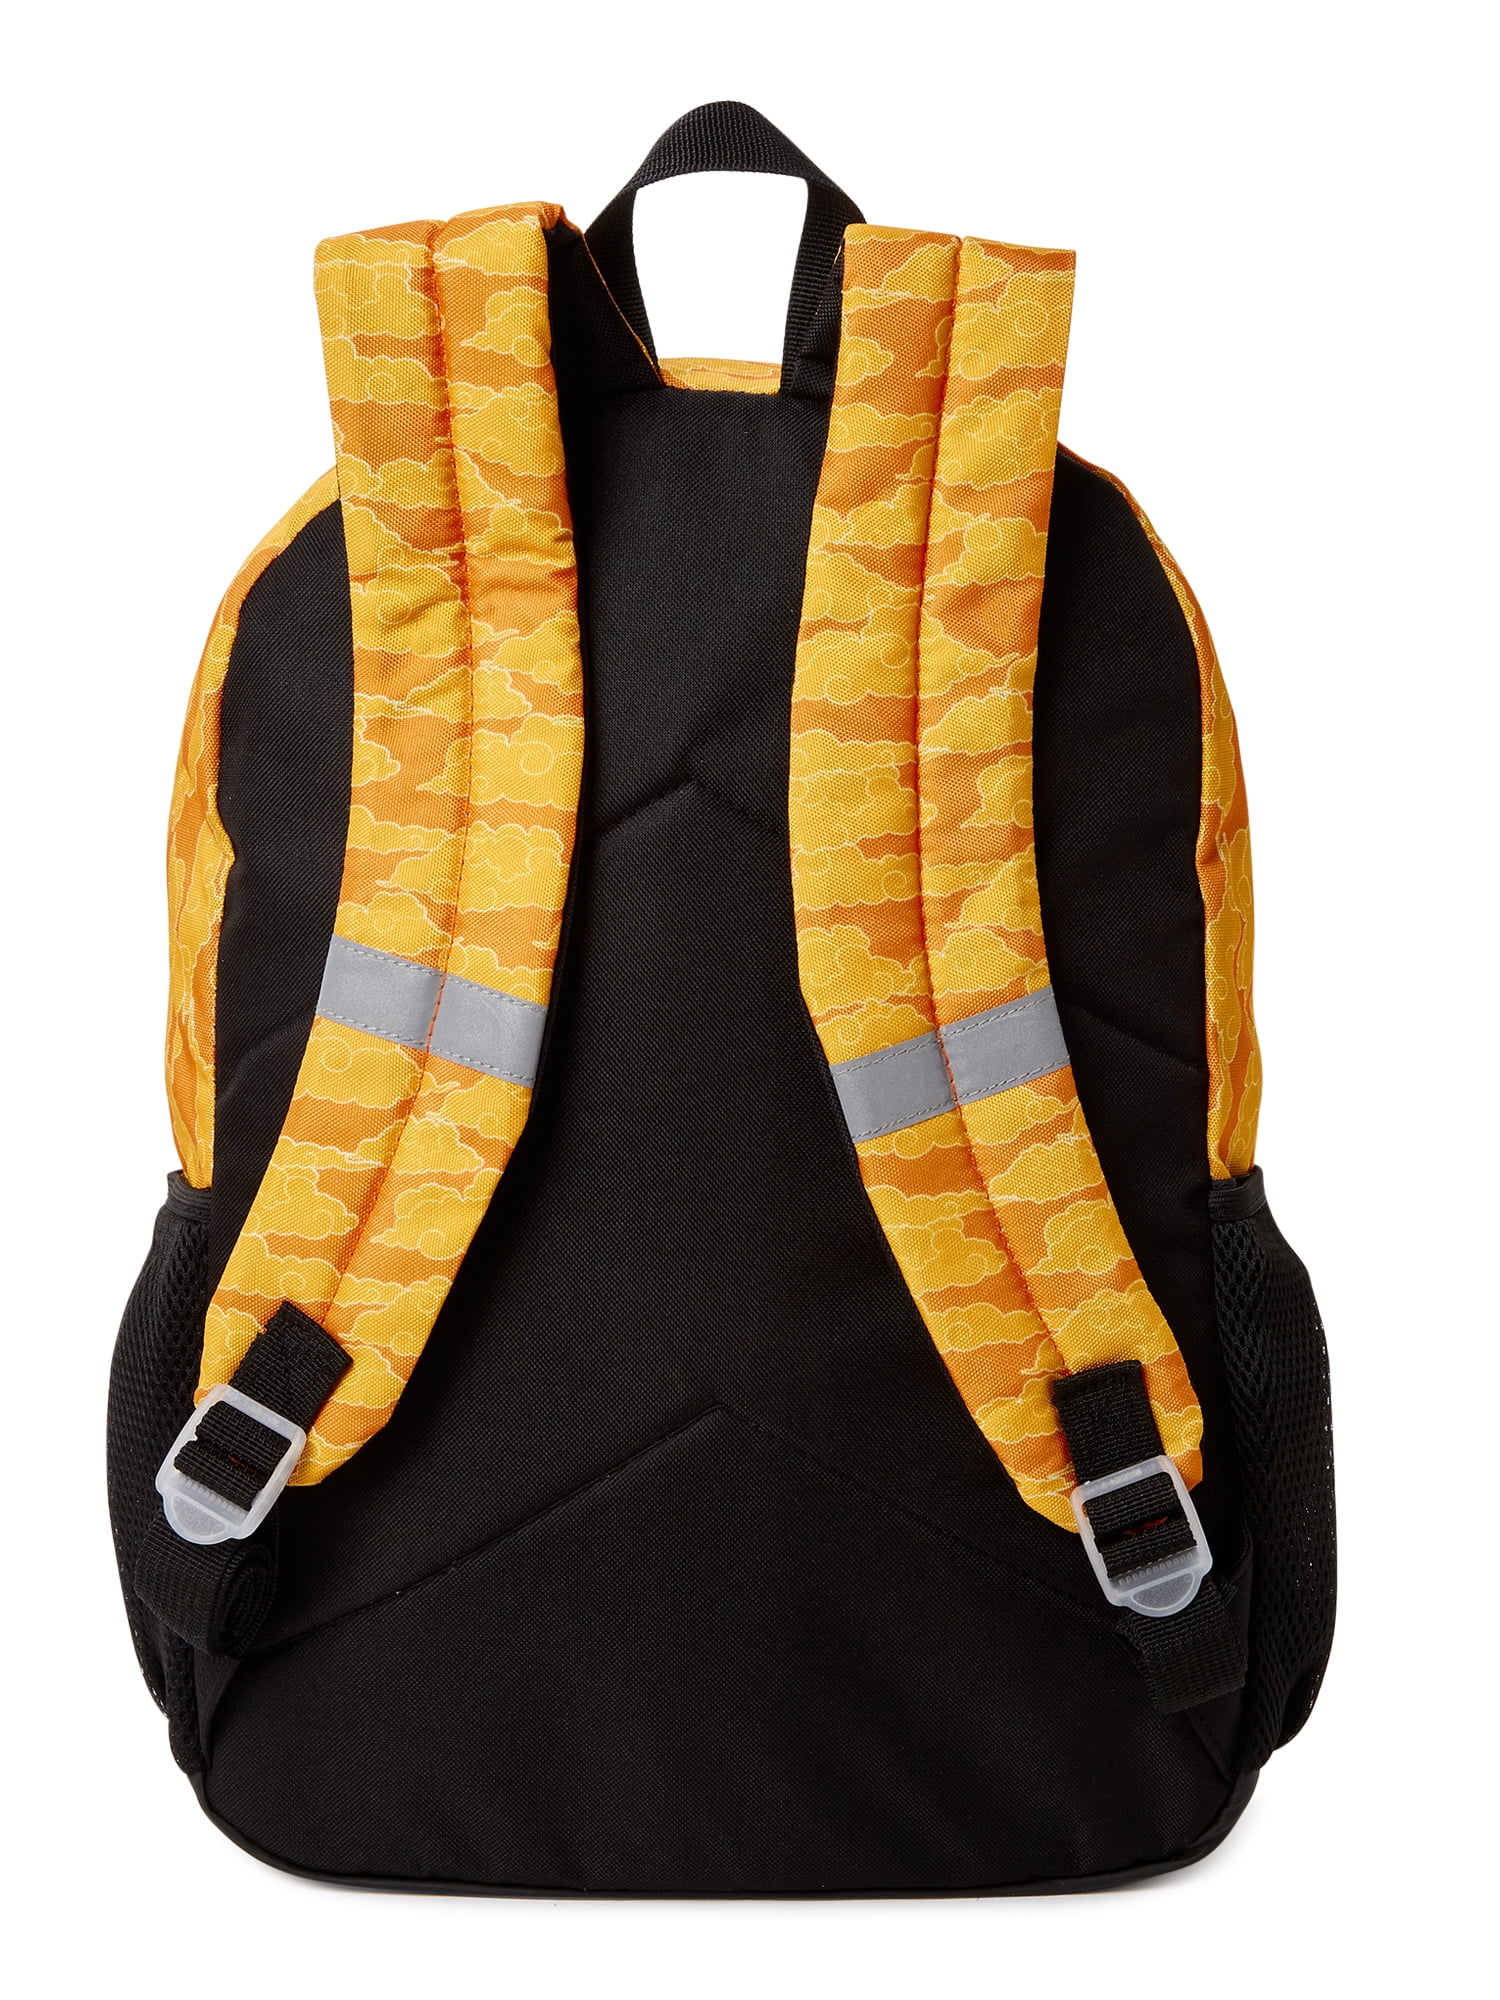 Naruto Boys' 5-Piece Backpack Lunchbox Set - Orange/Multi, One Size